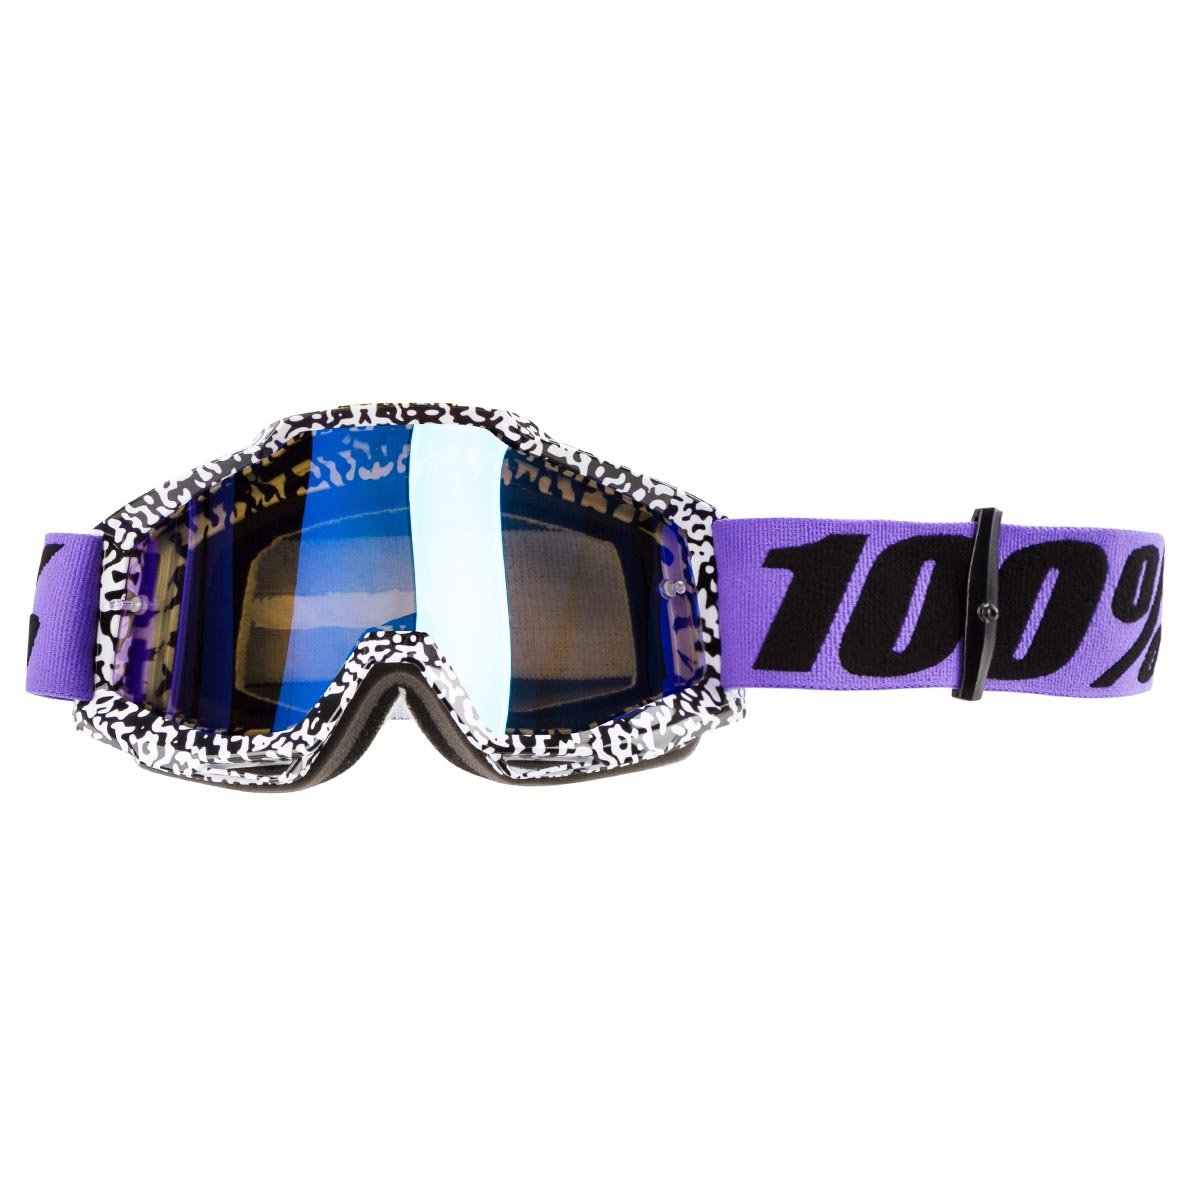 100% Goggle The Accuri Brentwood - Tinted Blue Anti-Fog